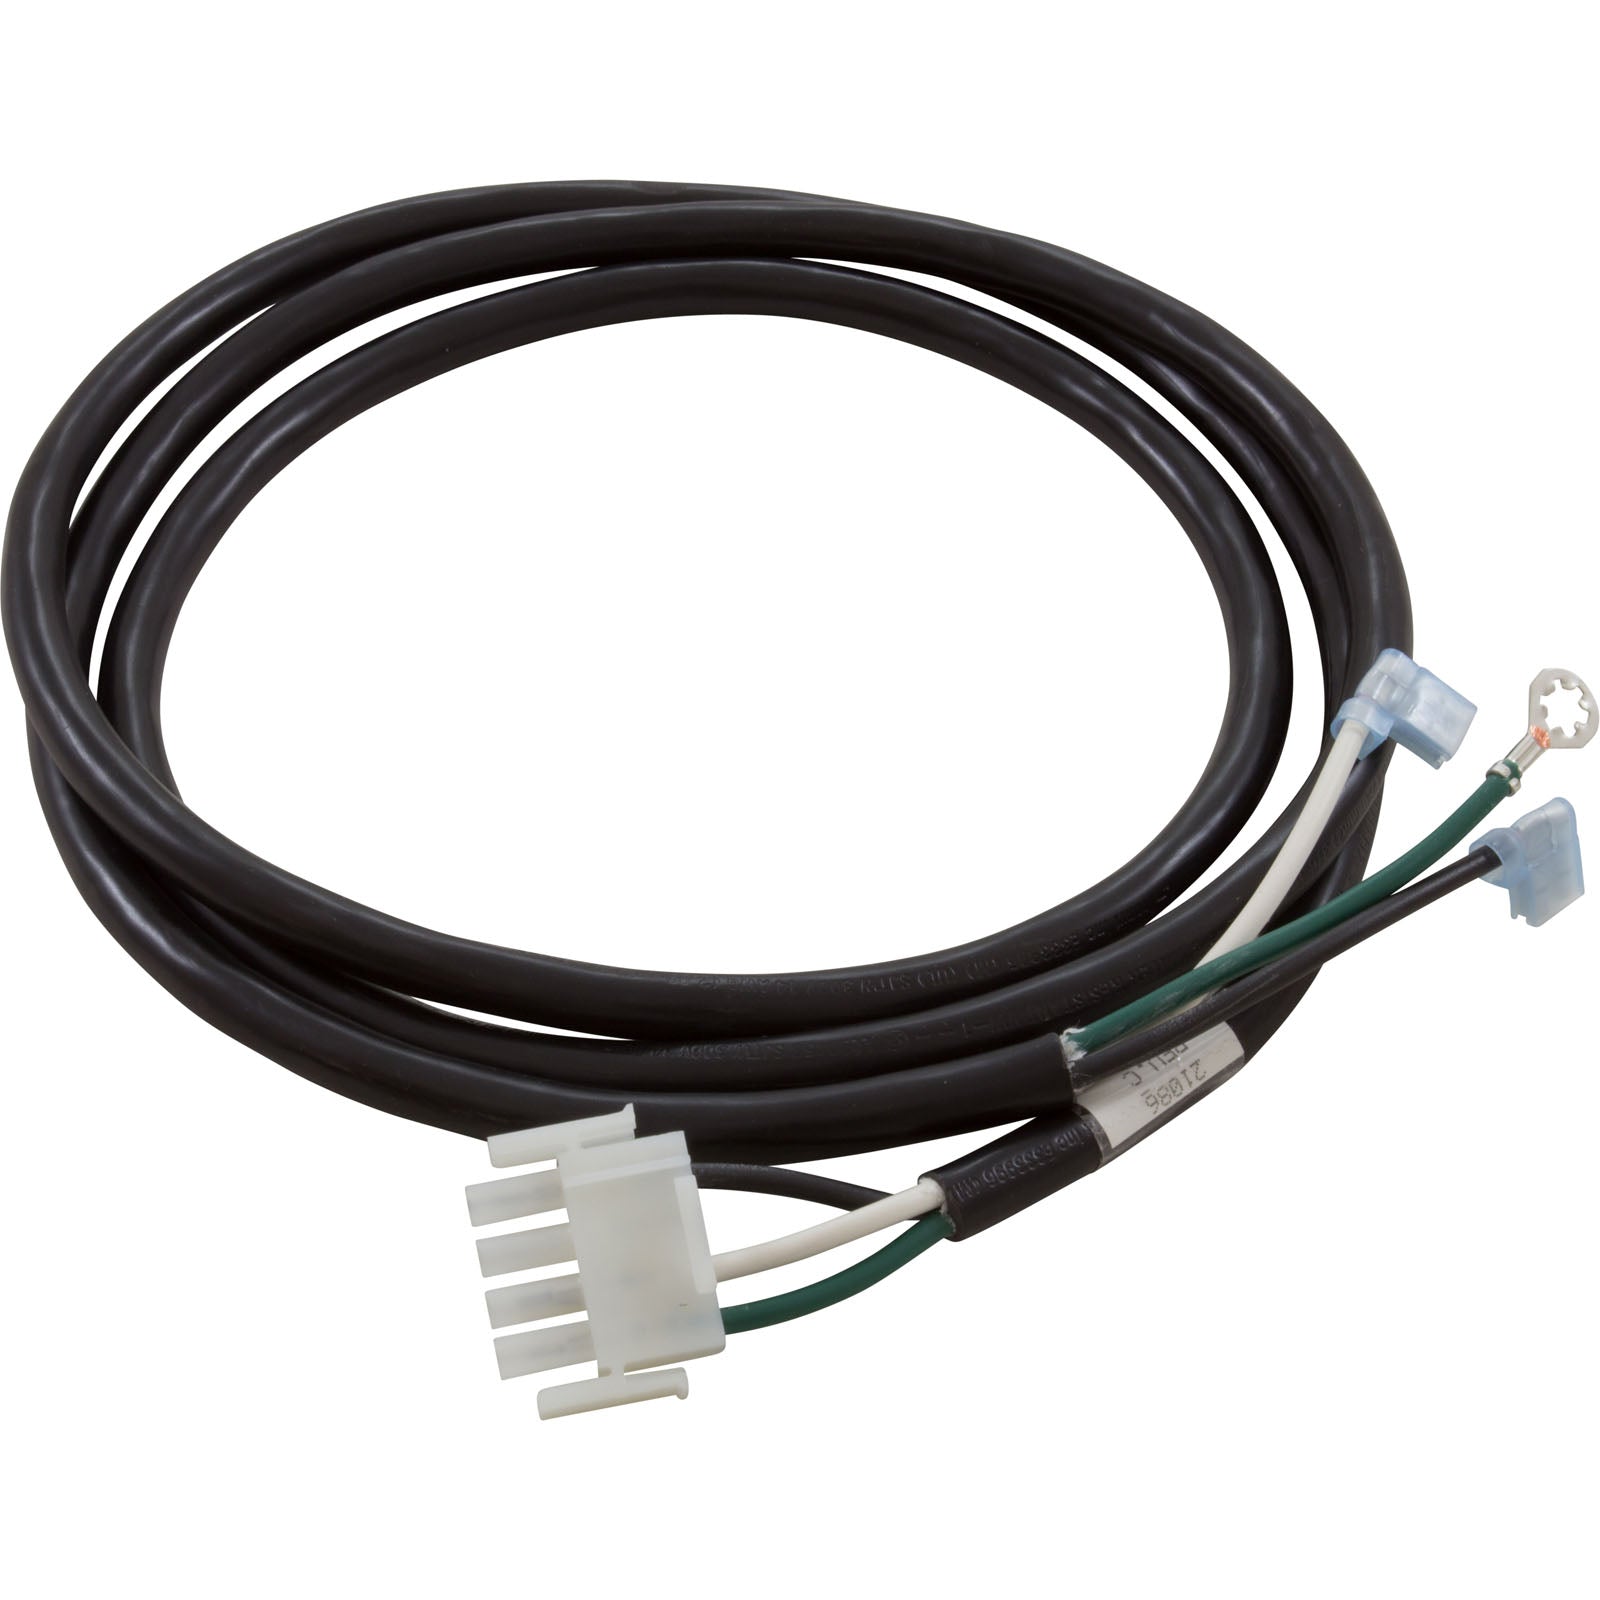 Pump / Air Blower / Ozone Cord 1 speed, 16/3 4 pin amp plug (21086)